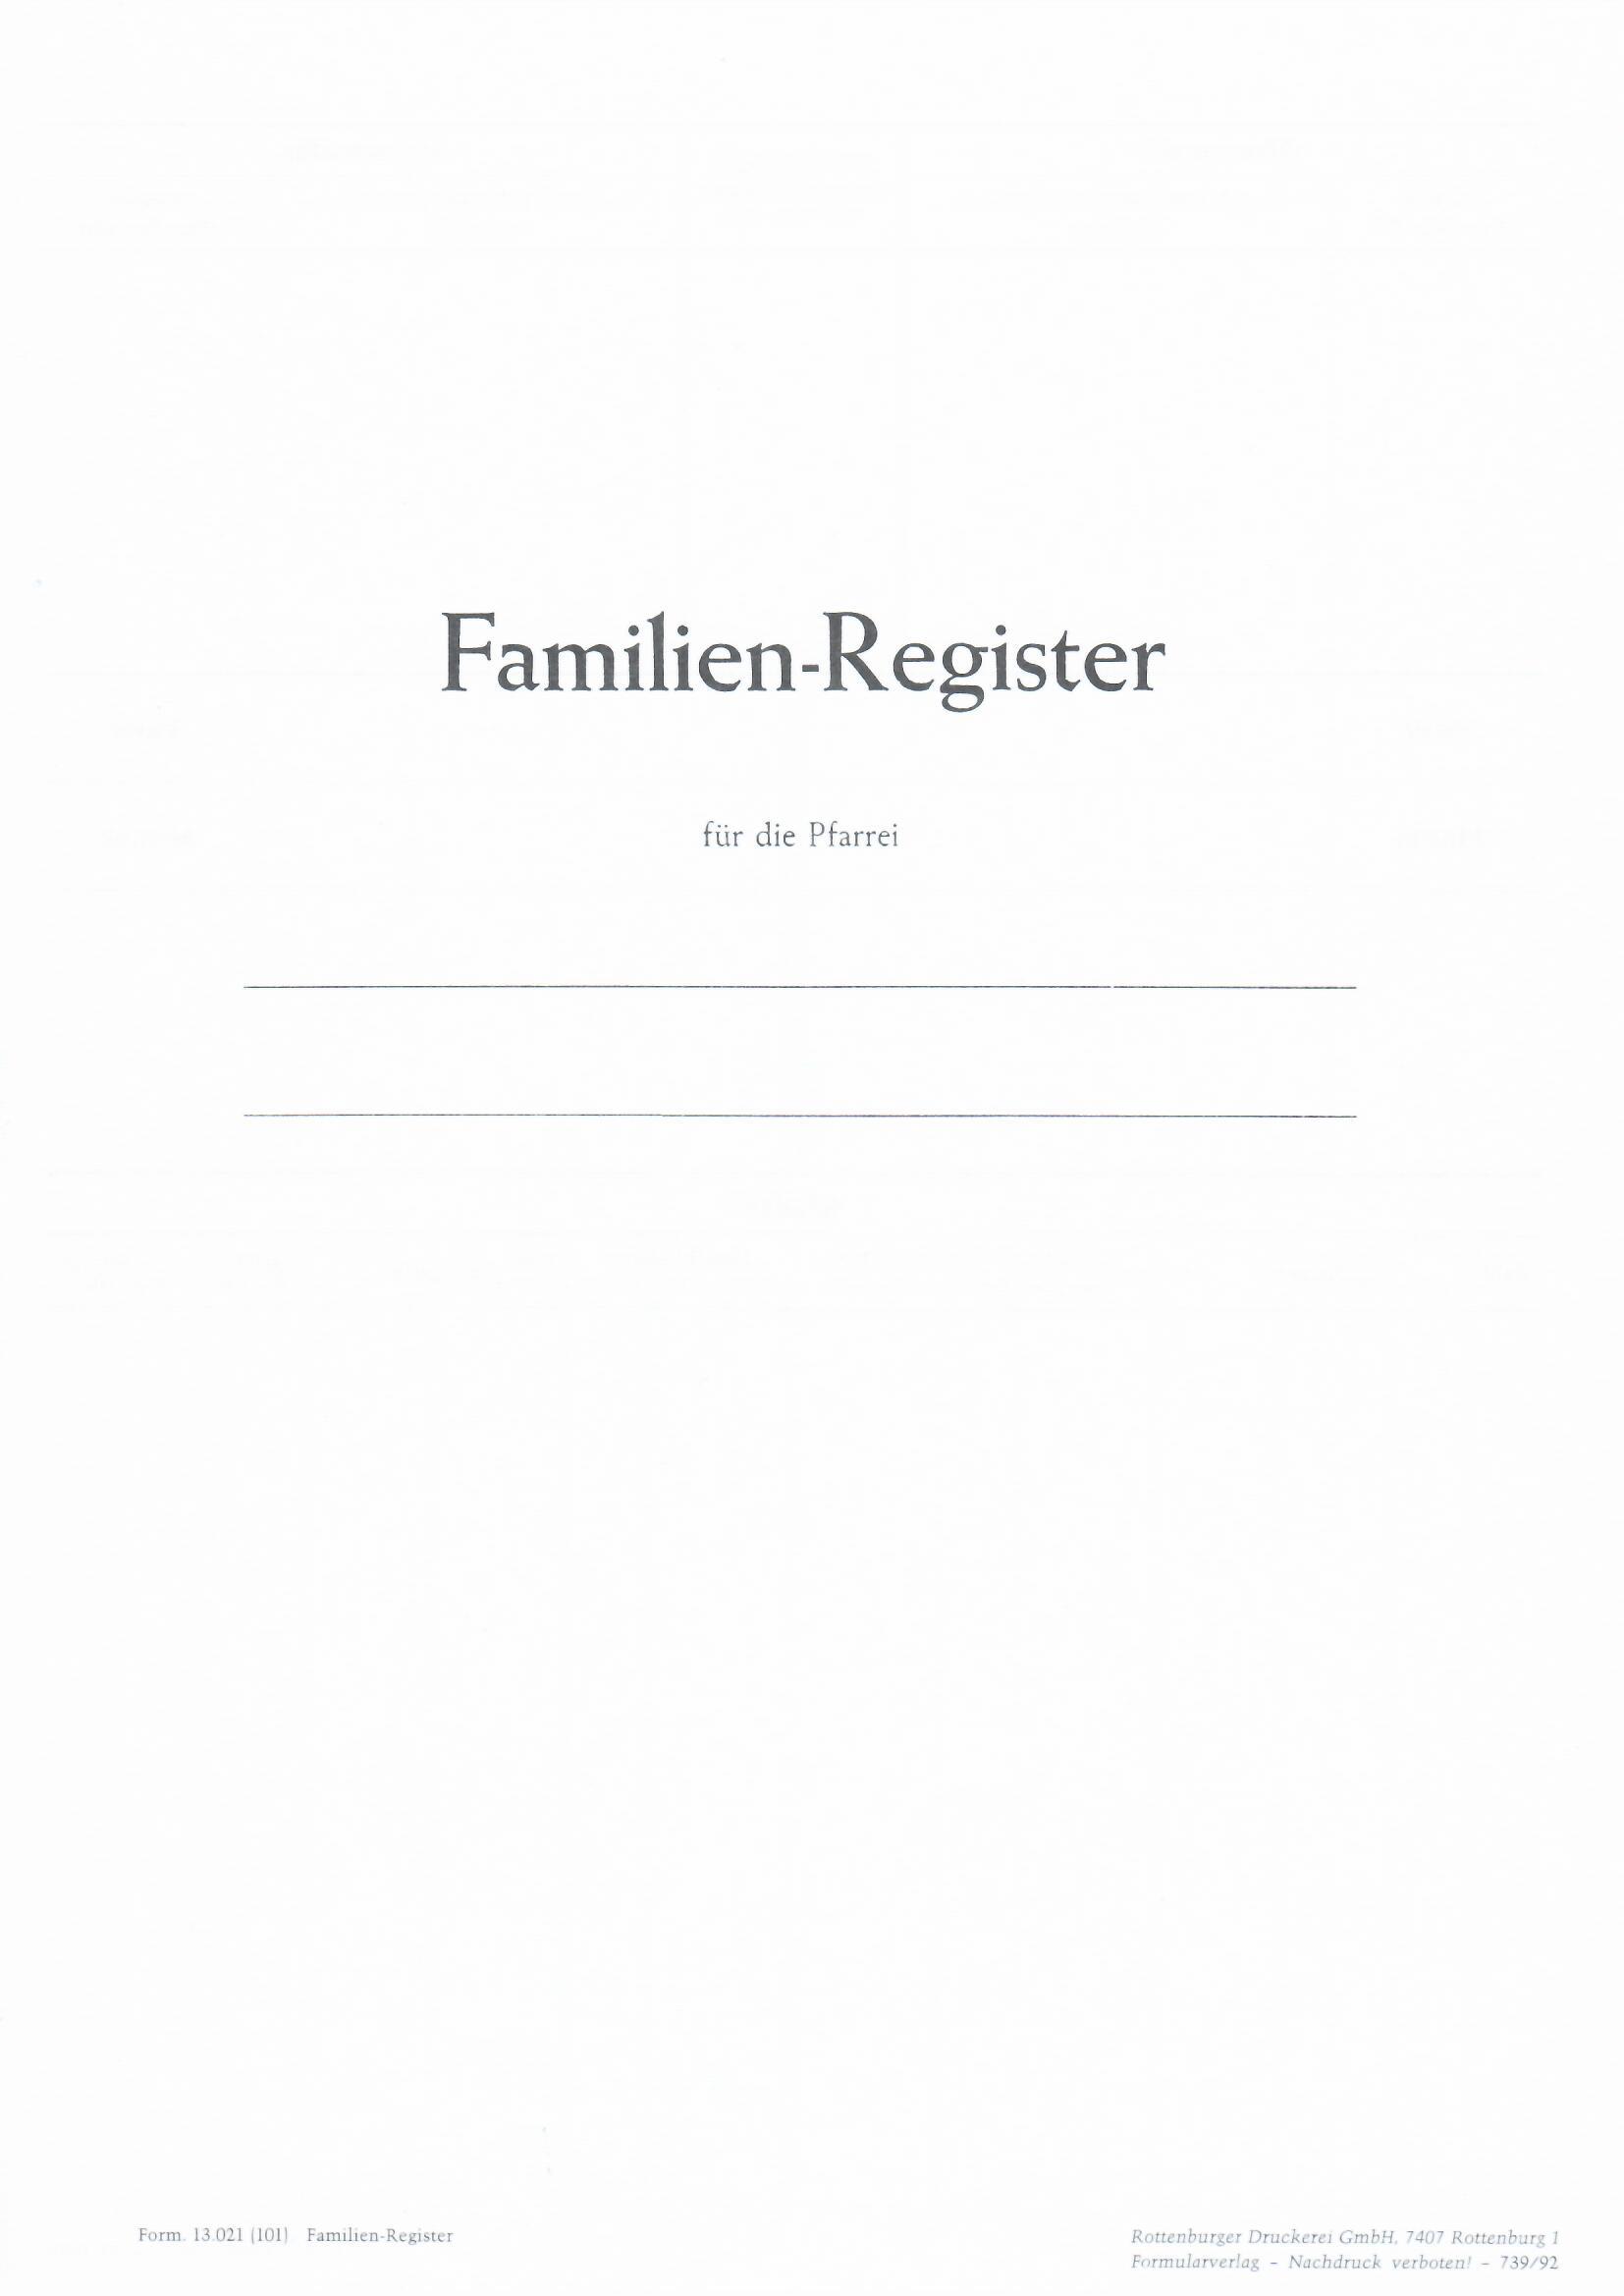 13.021a Familienregister - Titelbogen